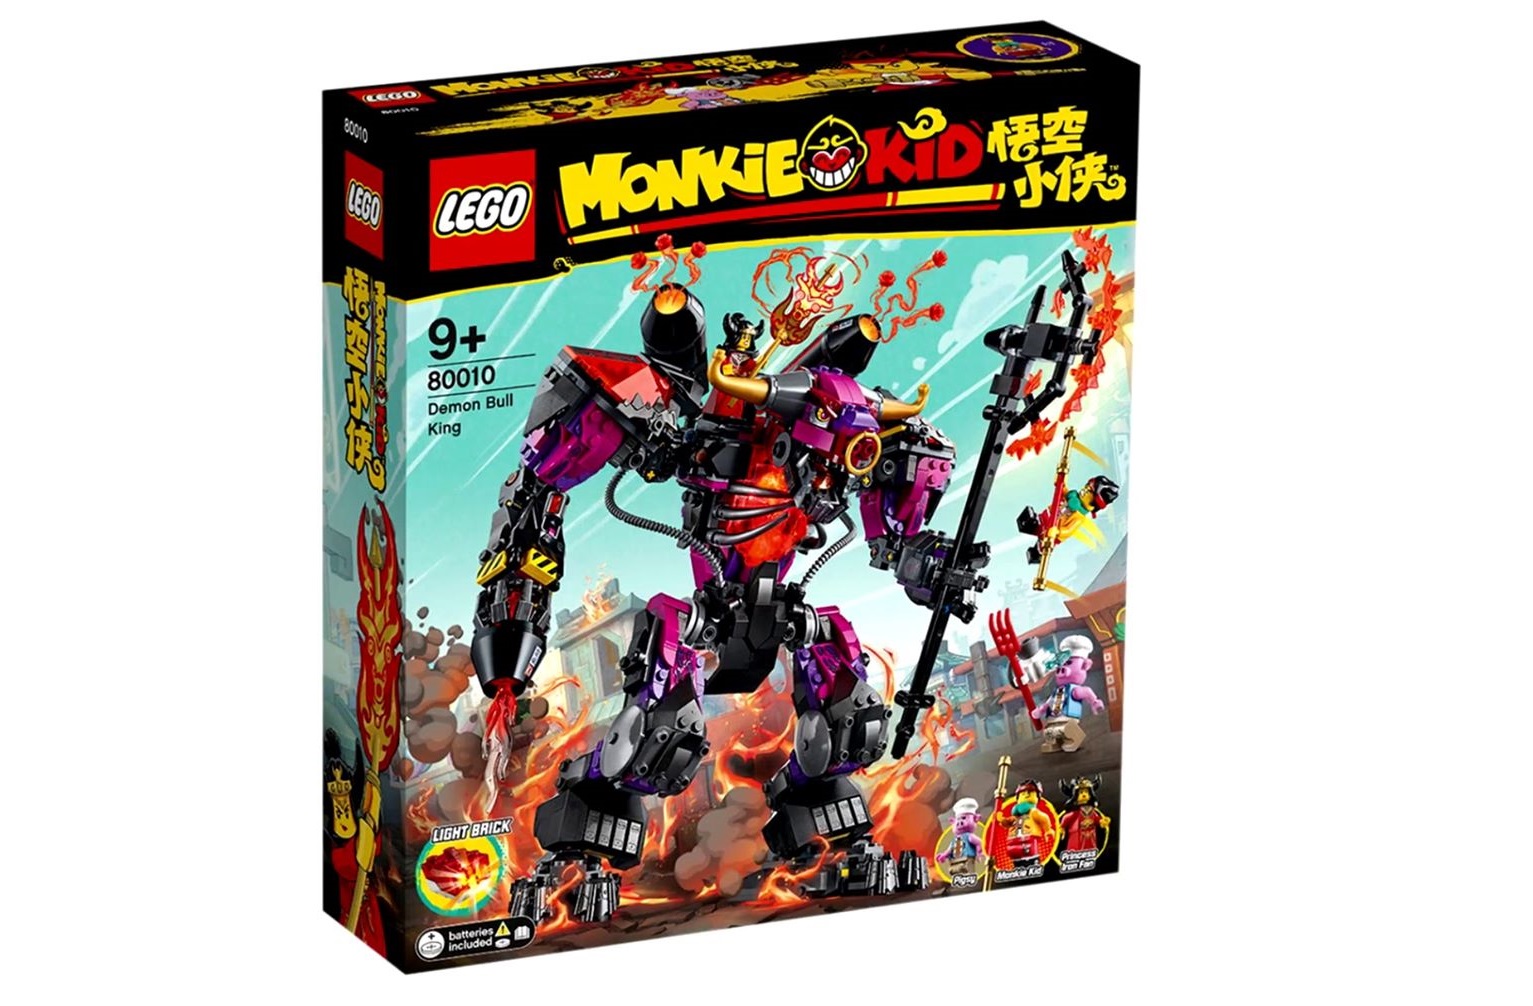 NEW LEGO Princess Iron Fan FROM SET 80010 Monkie Kid mk010 